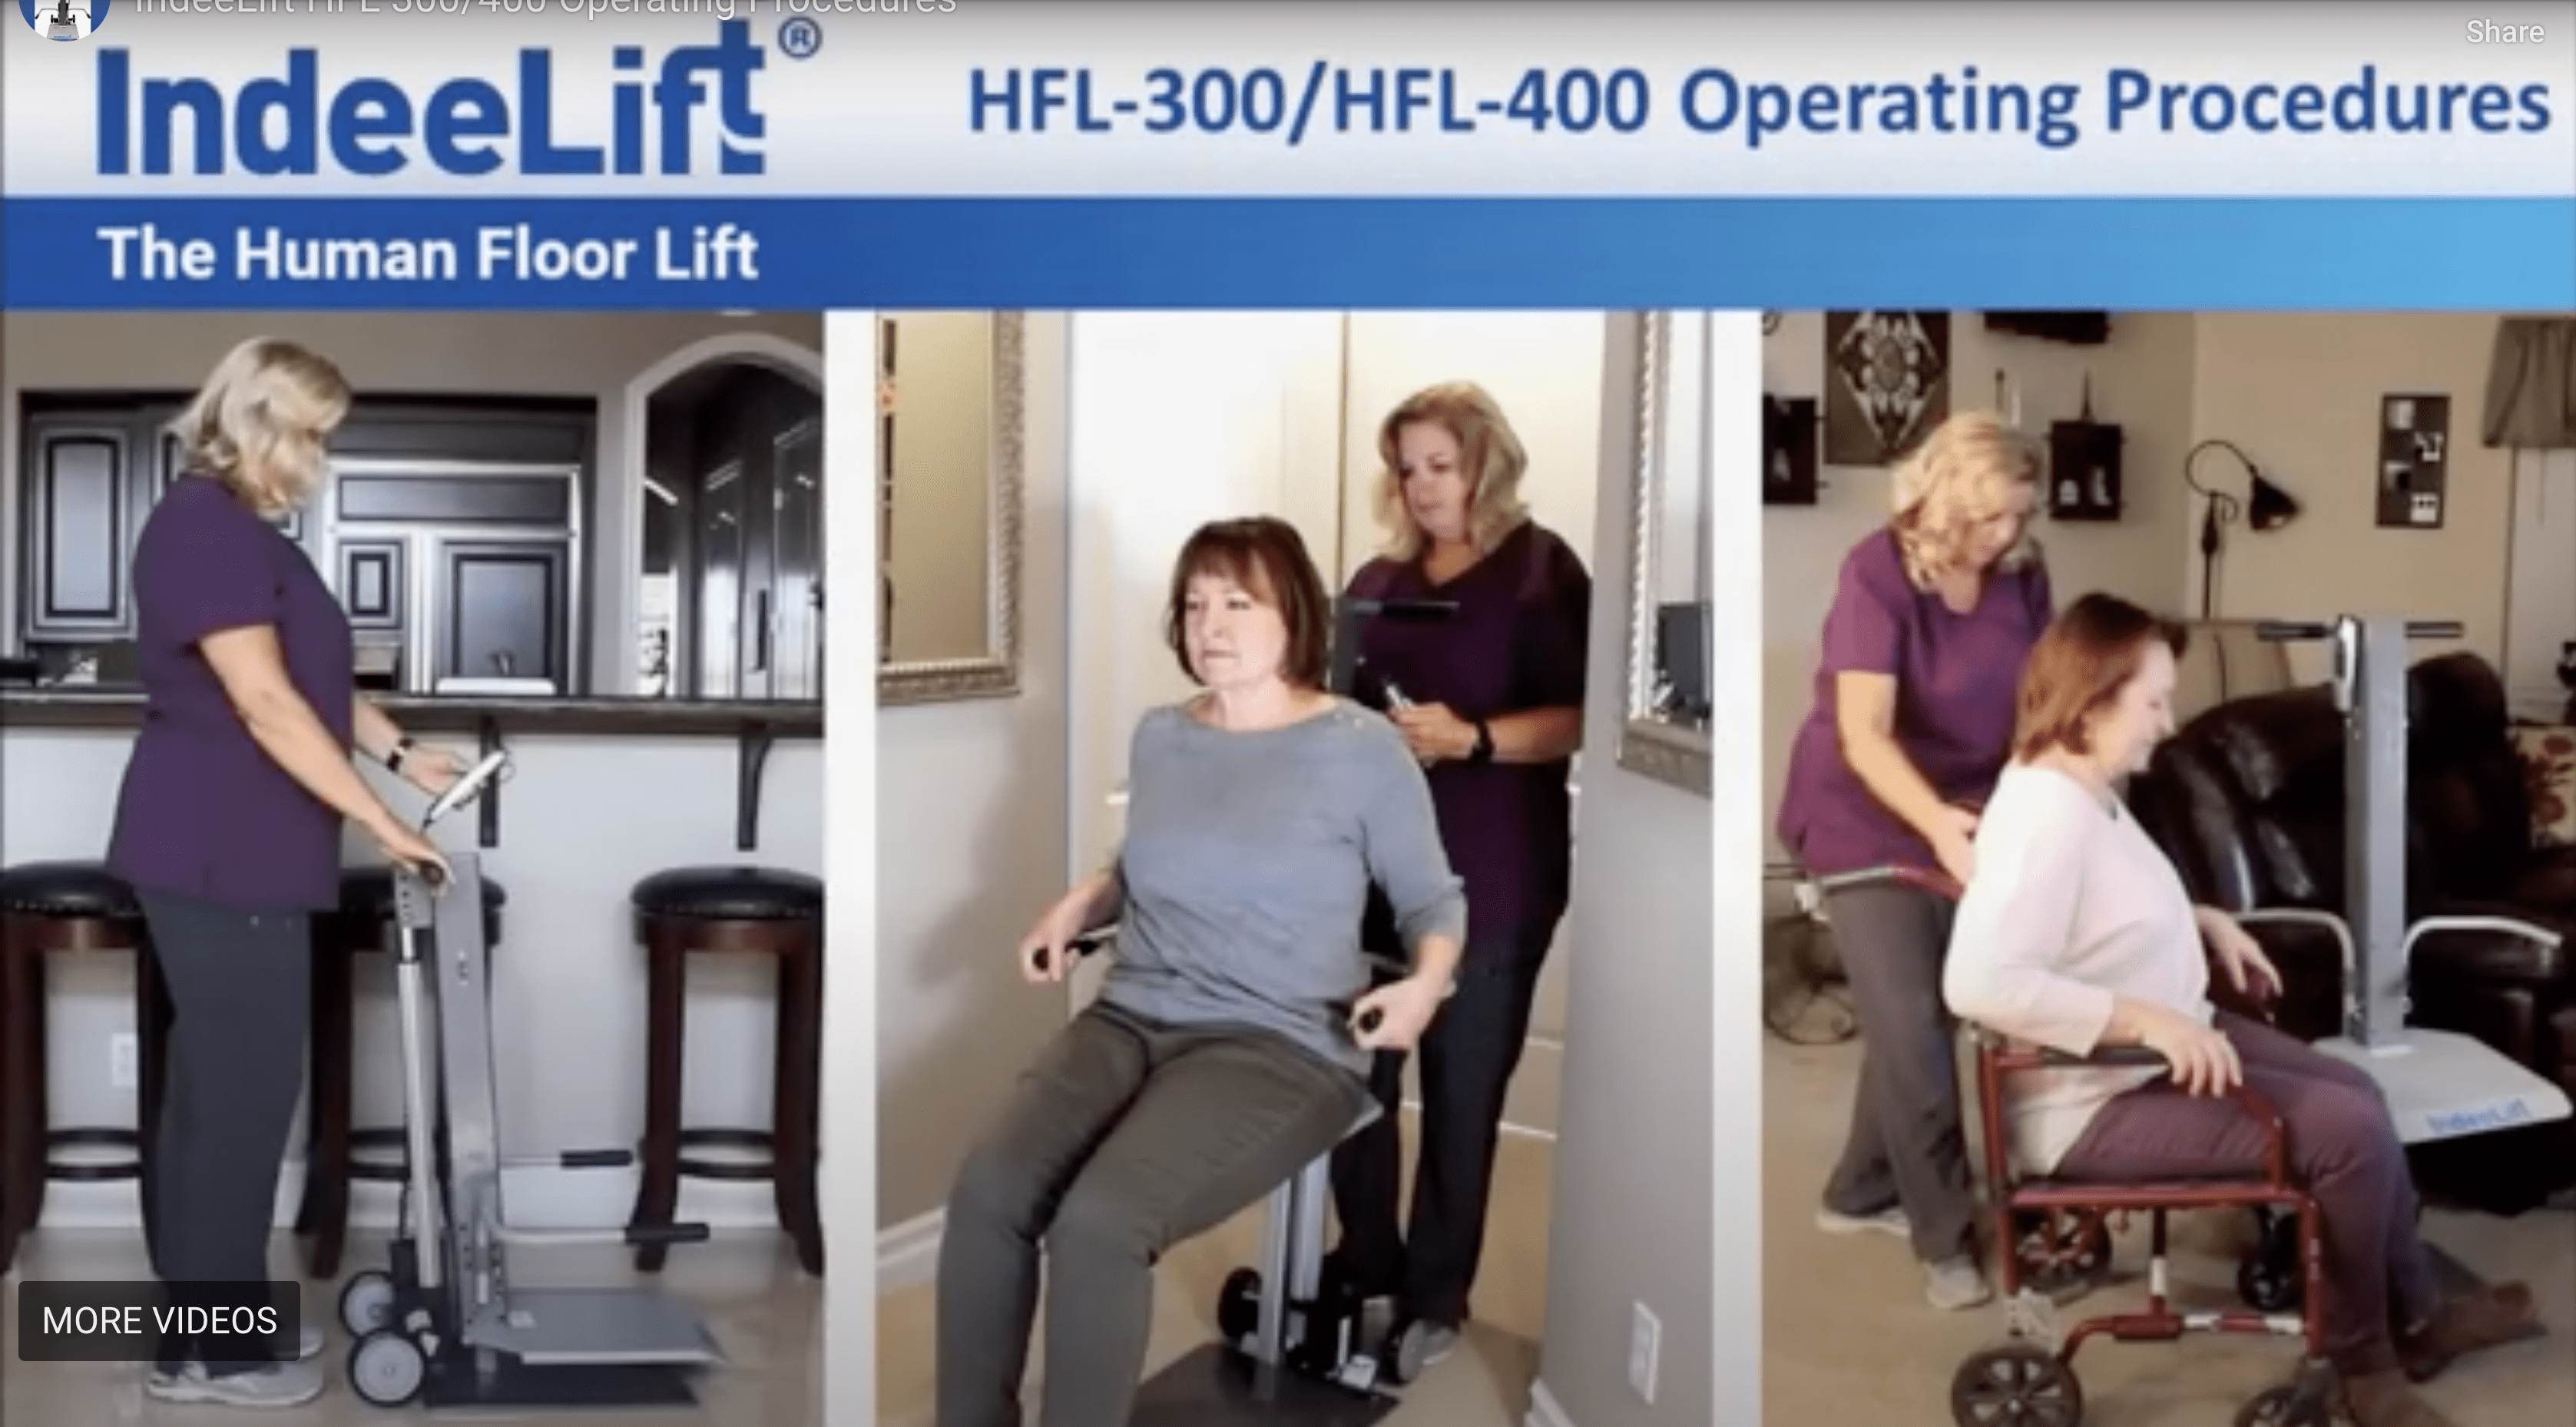 IndeeLift - Human Floor Lift, HFL 300